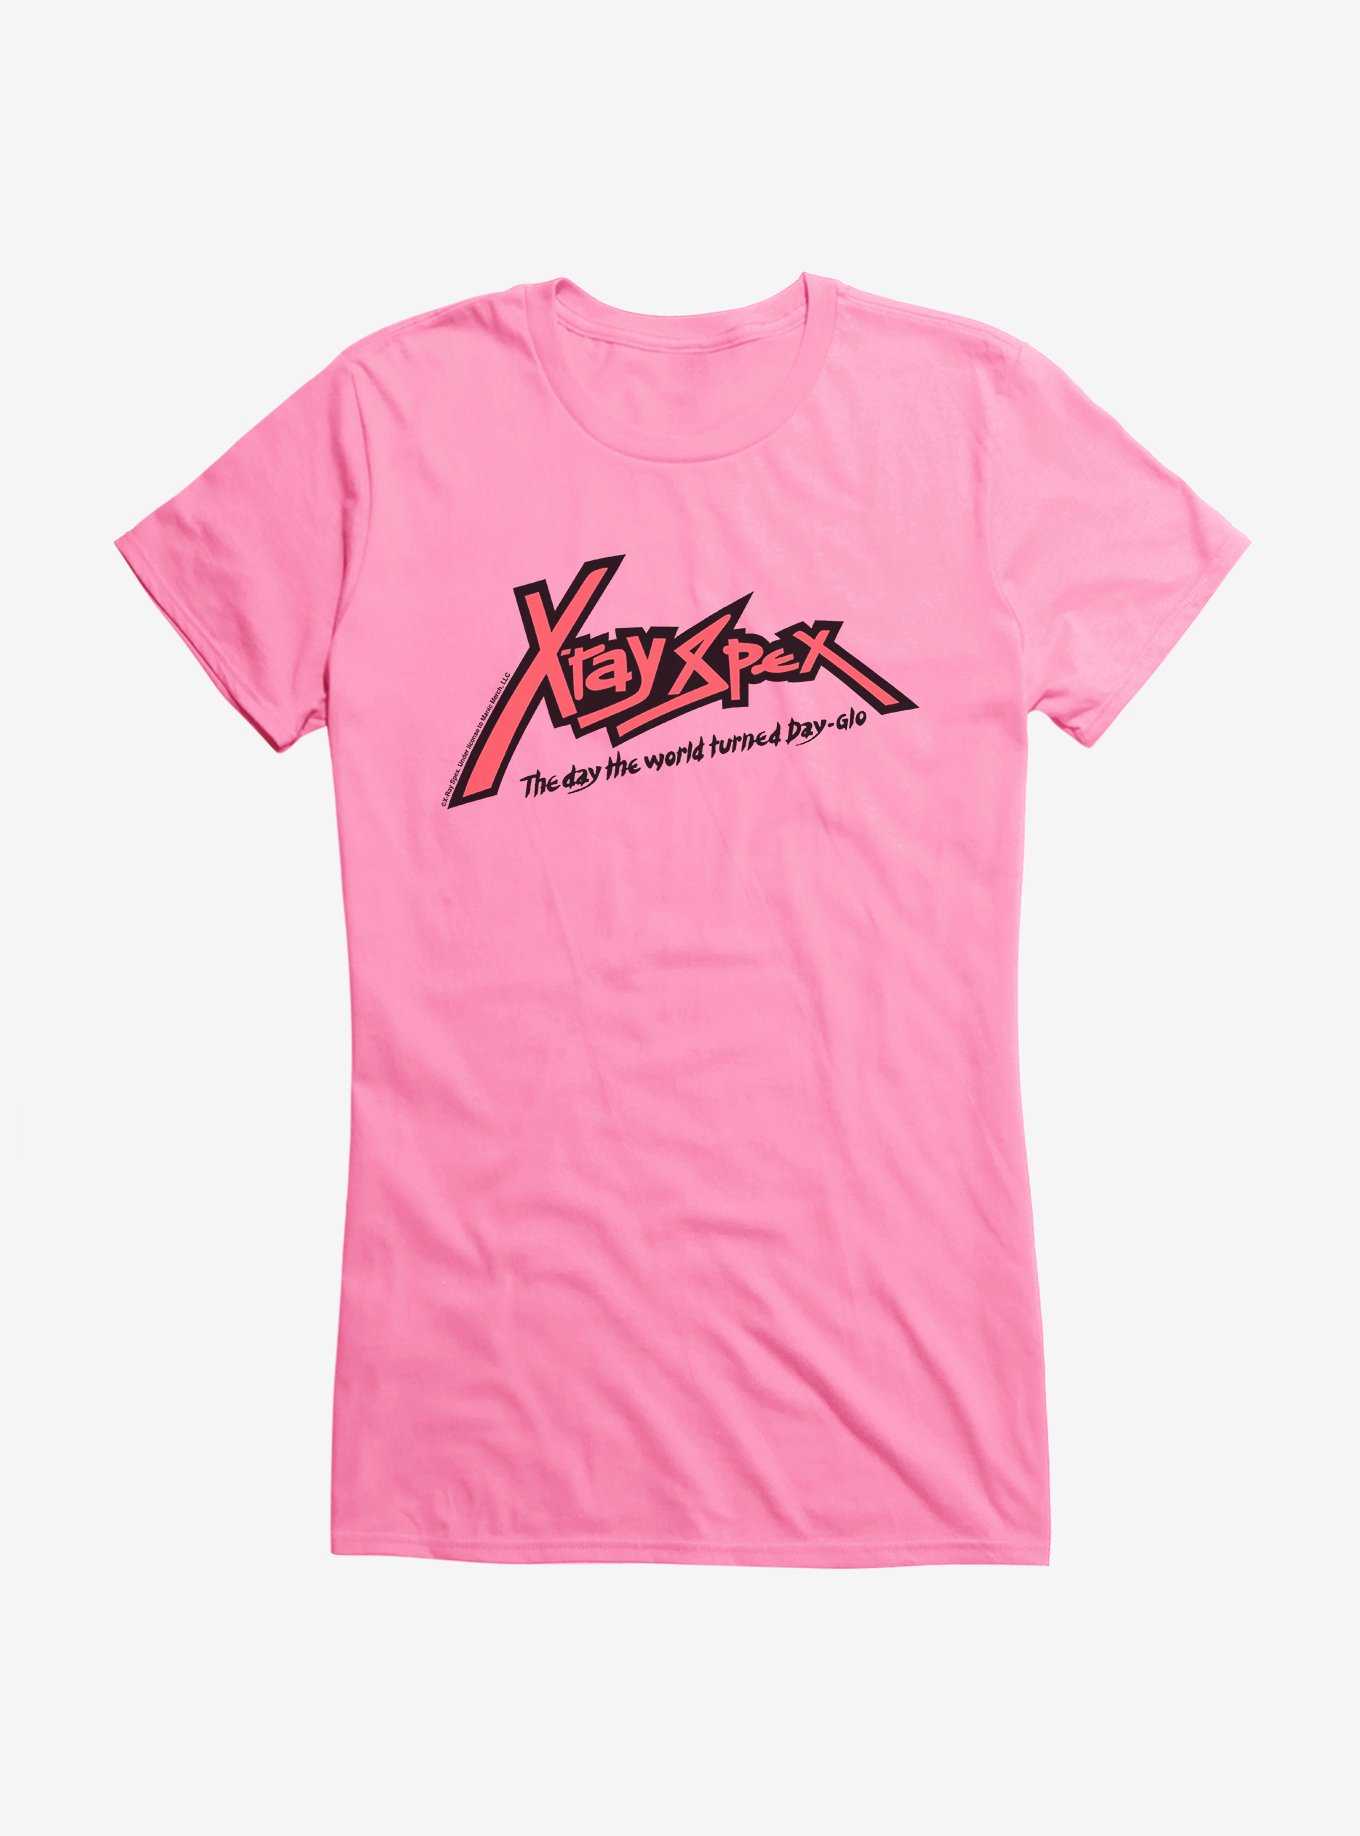 X-Ray Spex Day-Glo Girls T-Shirt, , hi-res